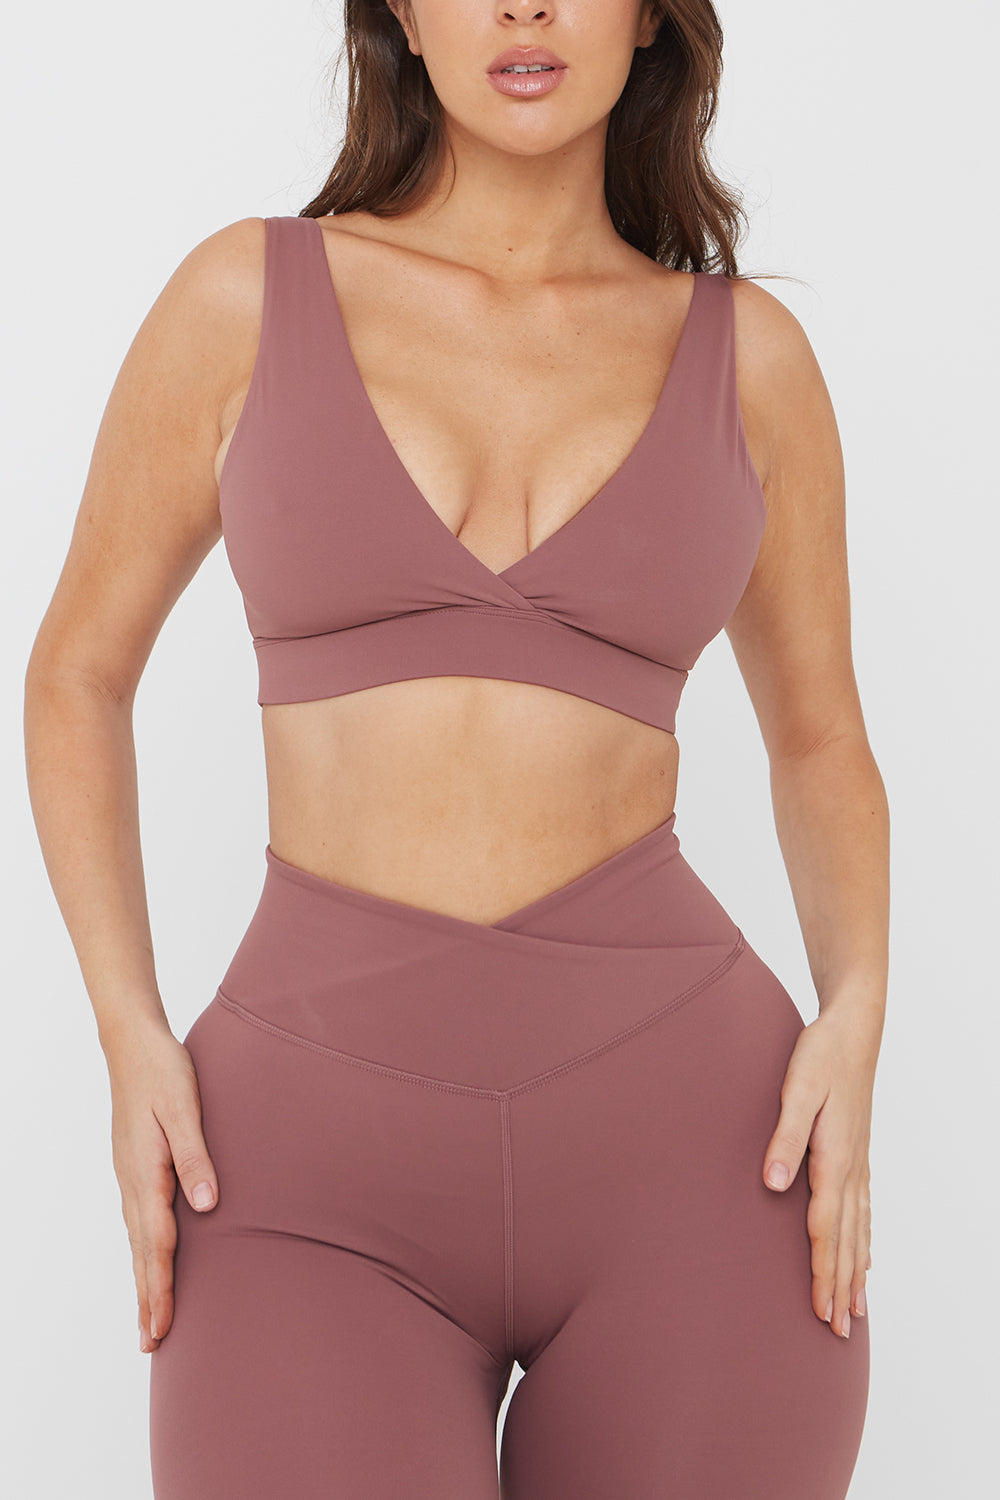 TALA Solasta medium support sports bra in rose - exclusive to ASOS